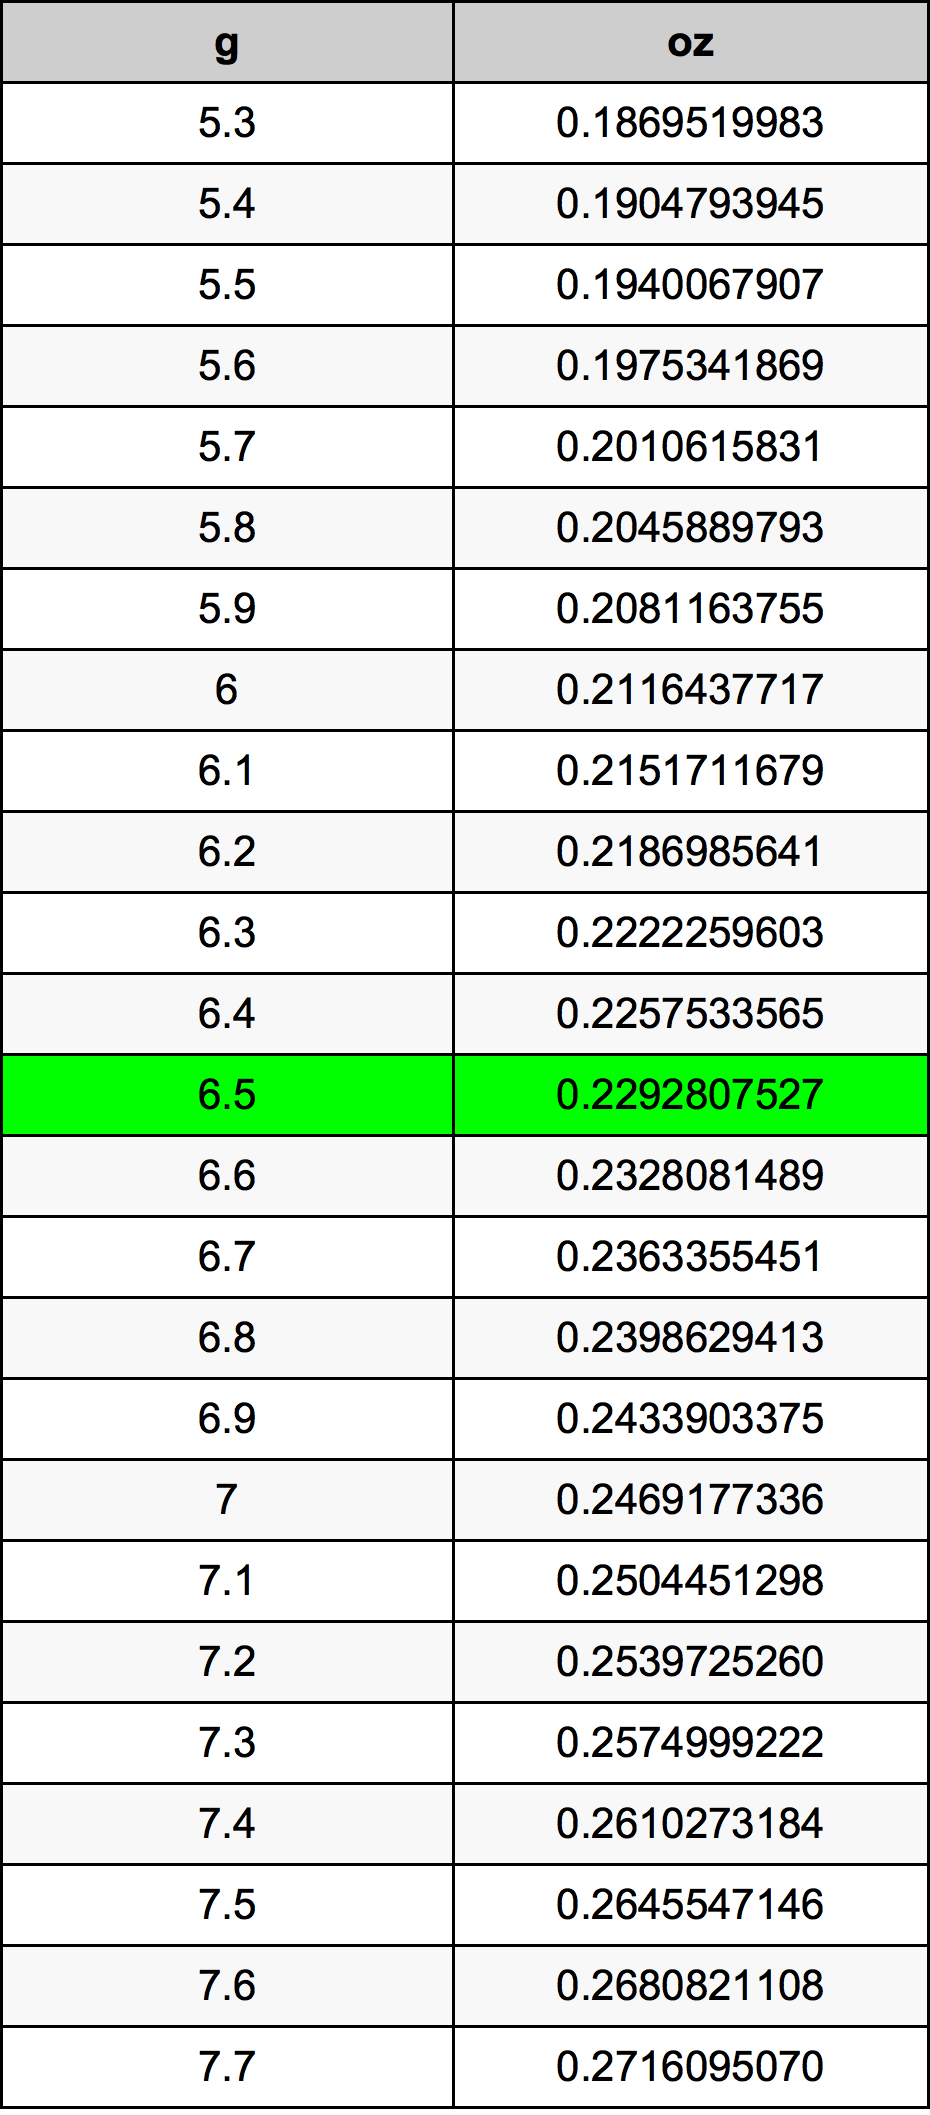 6.5 غرام جدول تحويل